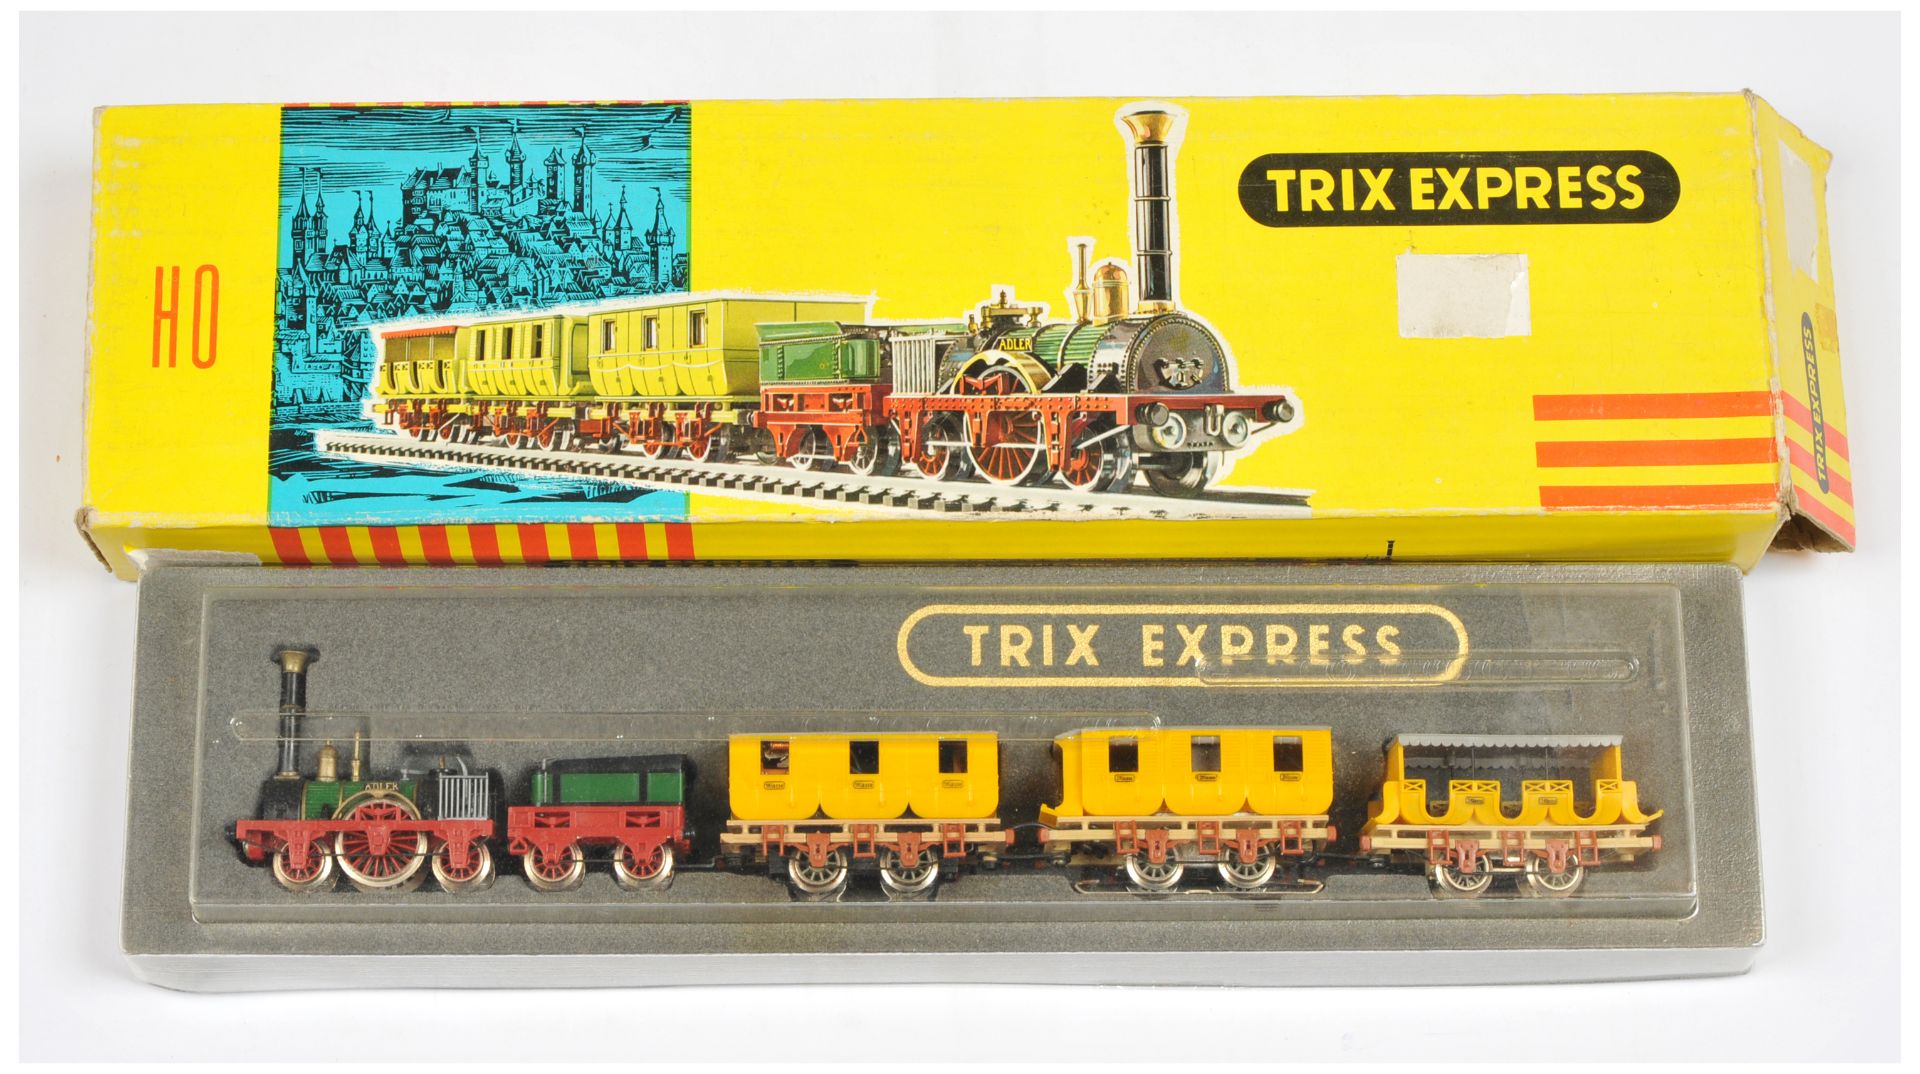 Trix Express 1532 De Adler Train Pack containing 2-2-2 green De Alder Loco and Tender plus 3 x 4-...